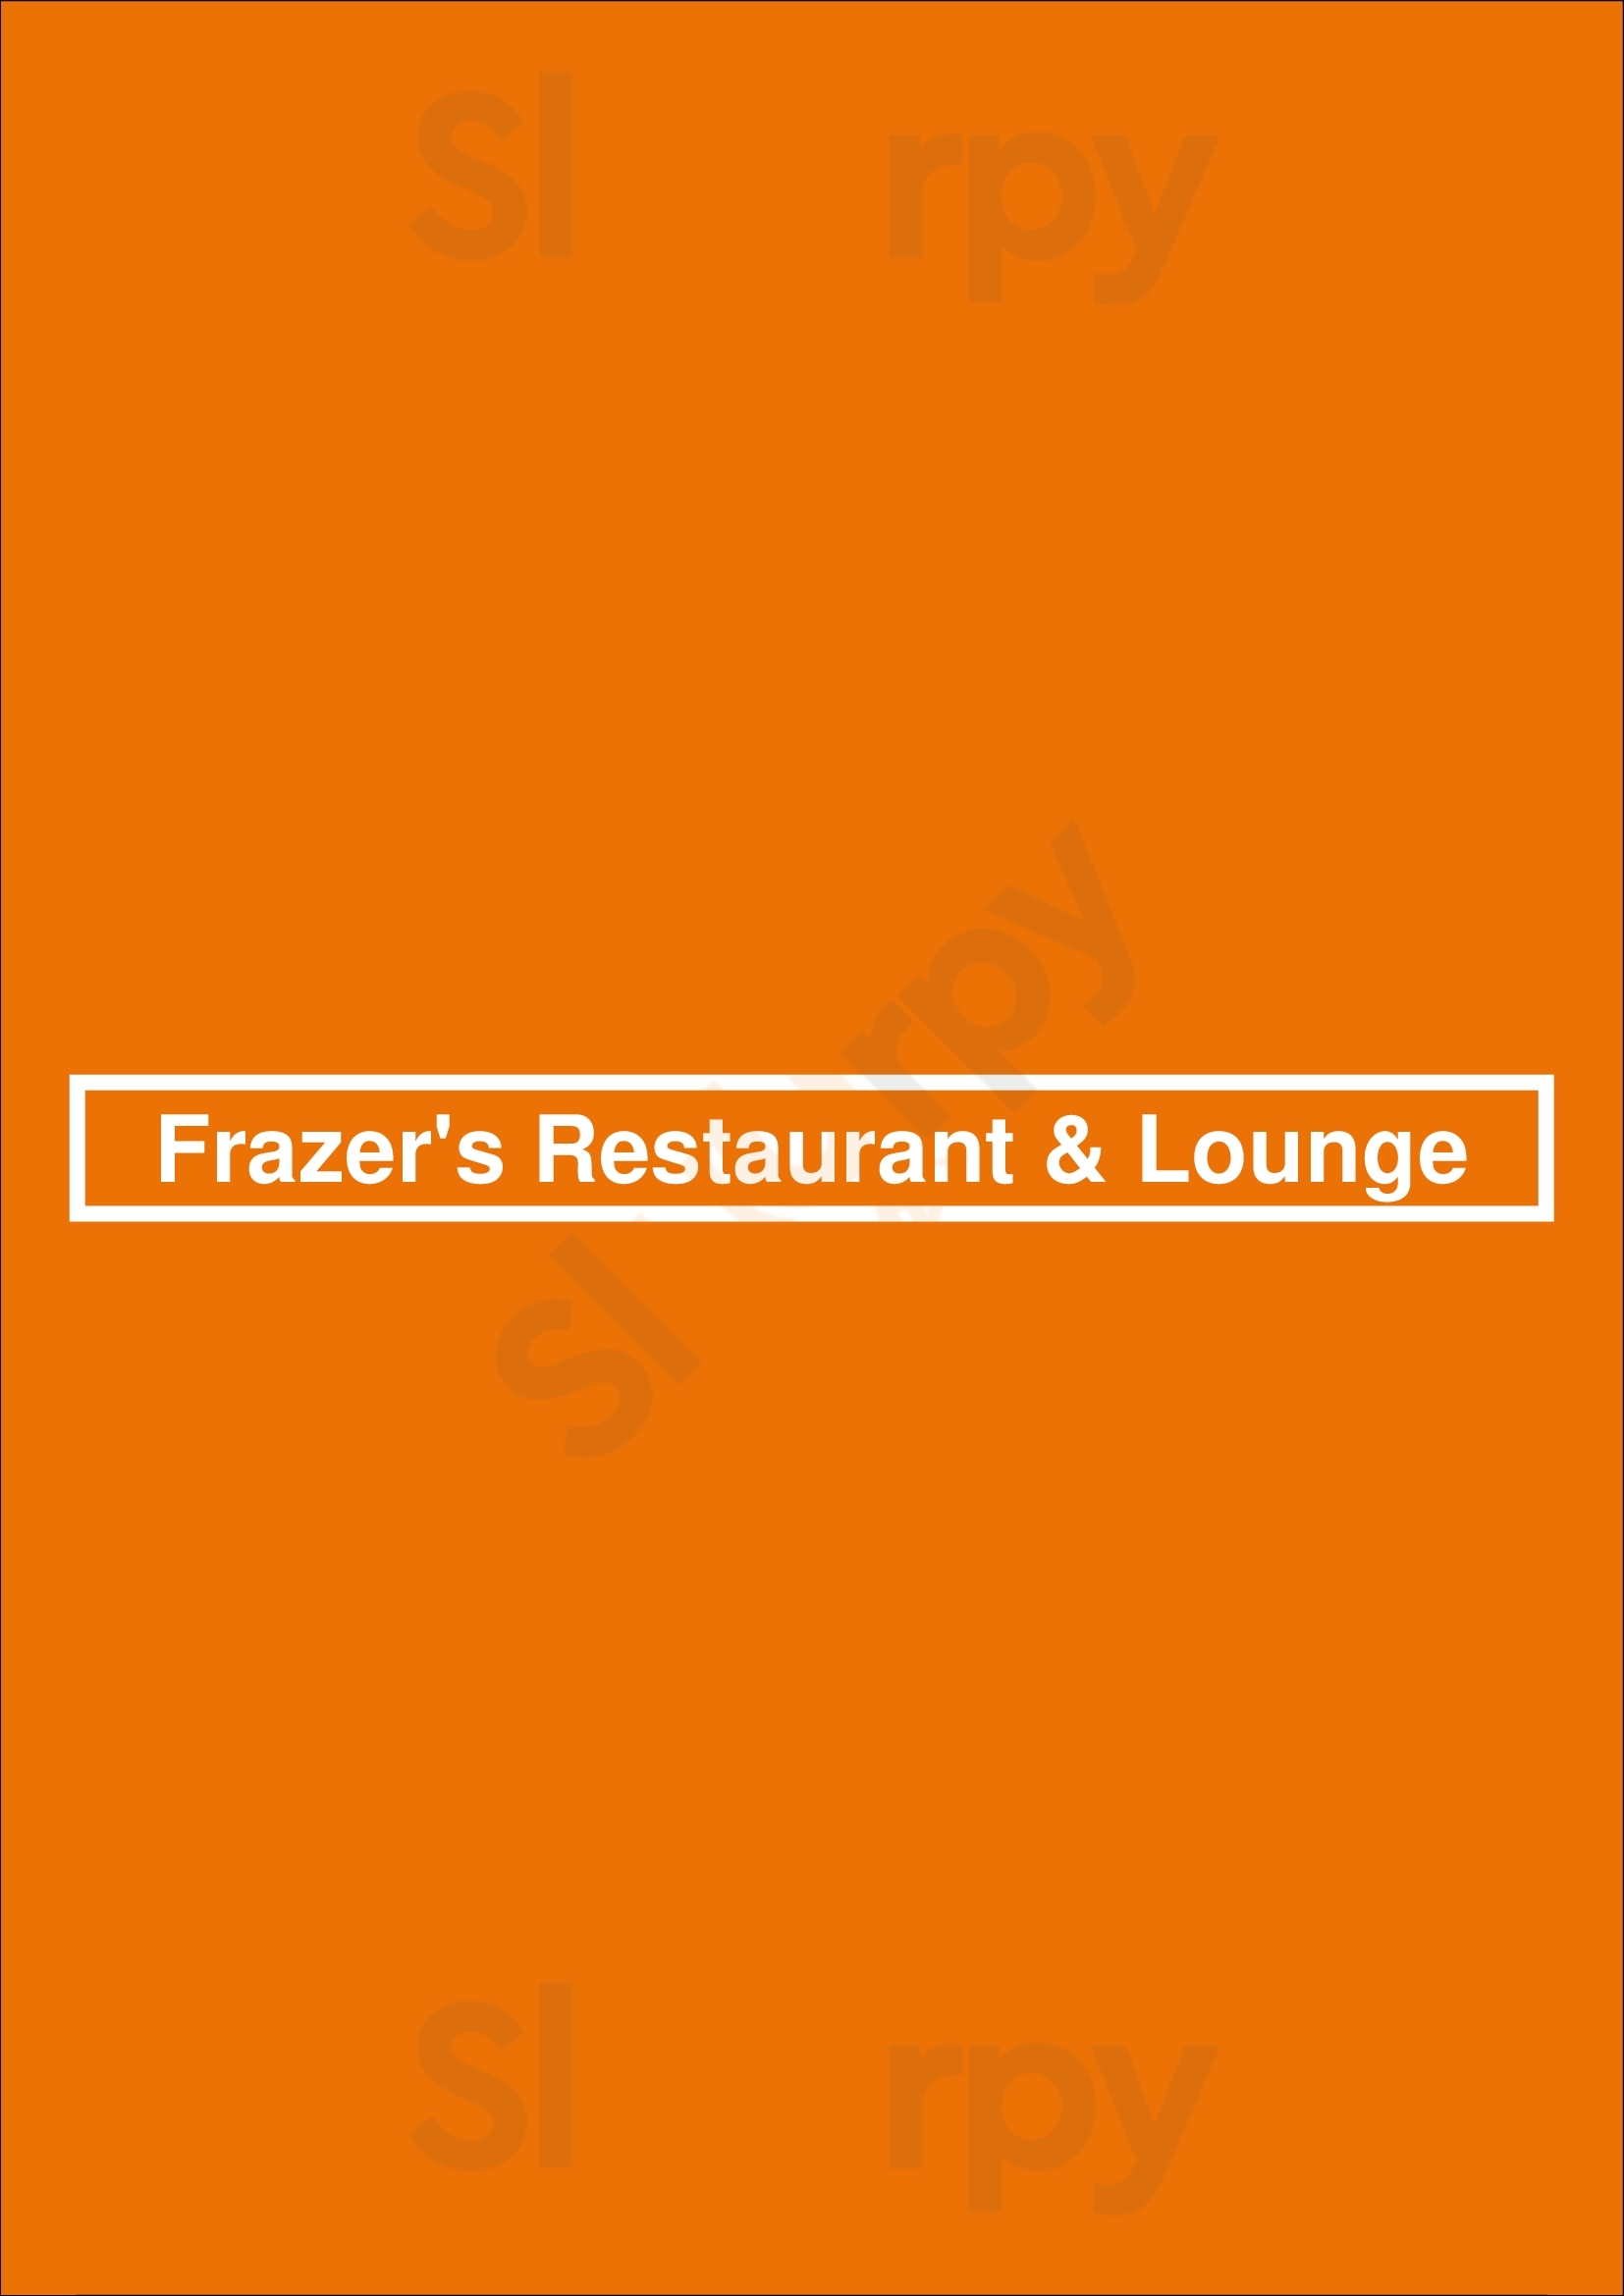 Frazer's Restaurant & Lounge Saint Louis Menu - 1